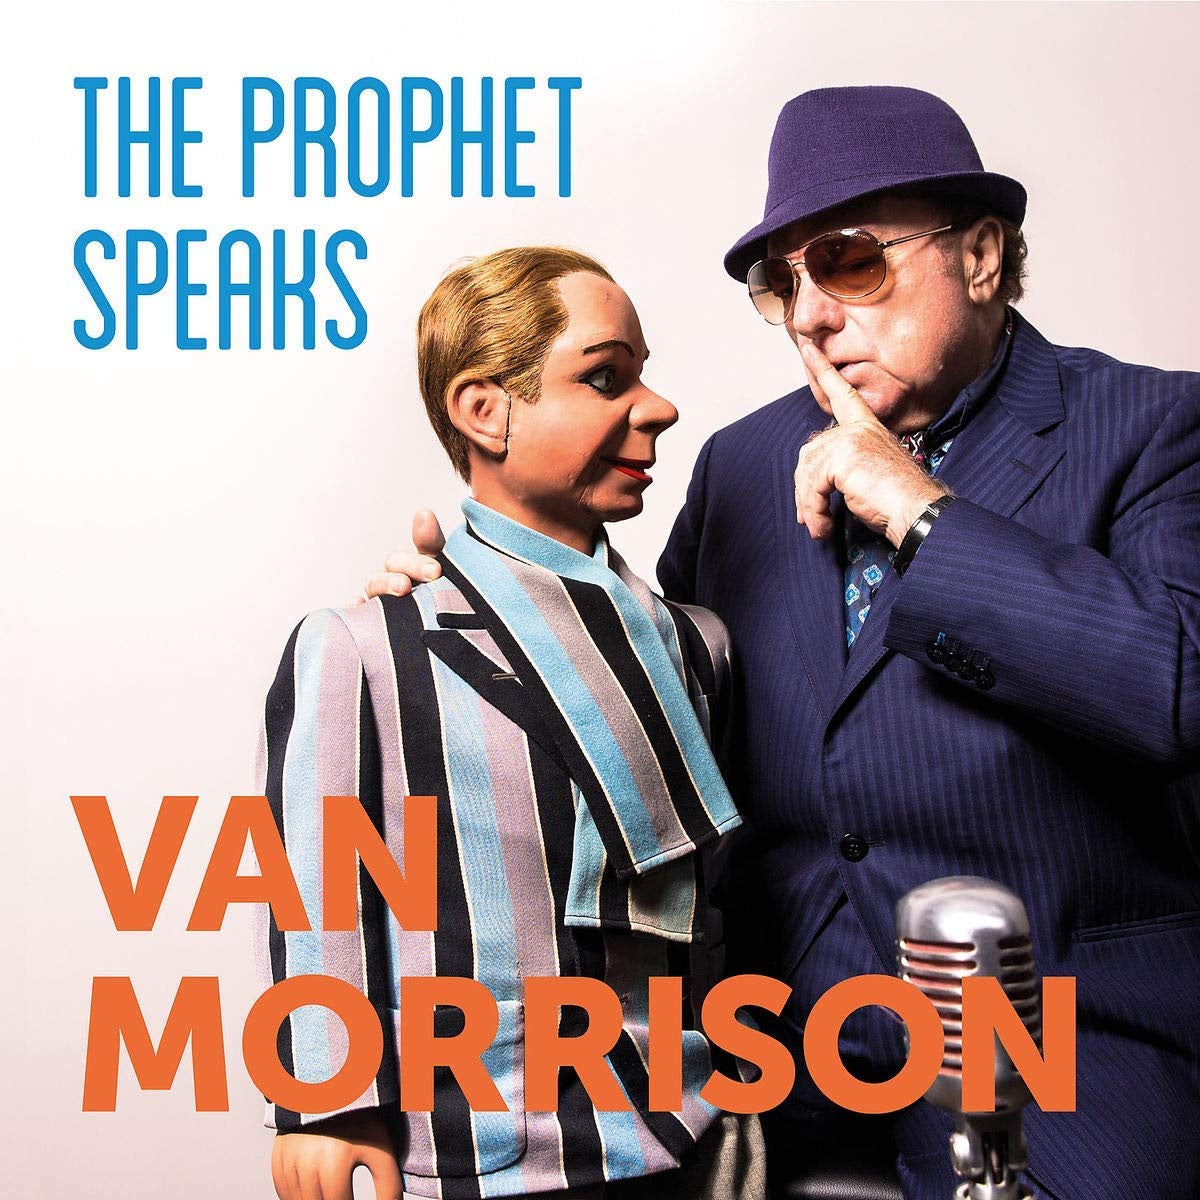 Van Morrison ‎– The Prophet Speaks - New 2 Lp Record 2018 Exile Europe Import Vinyl - Blues Rock / R&B